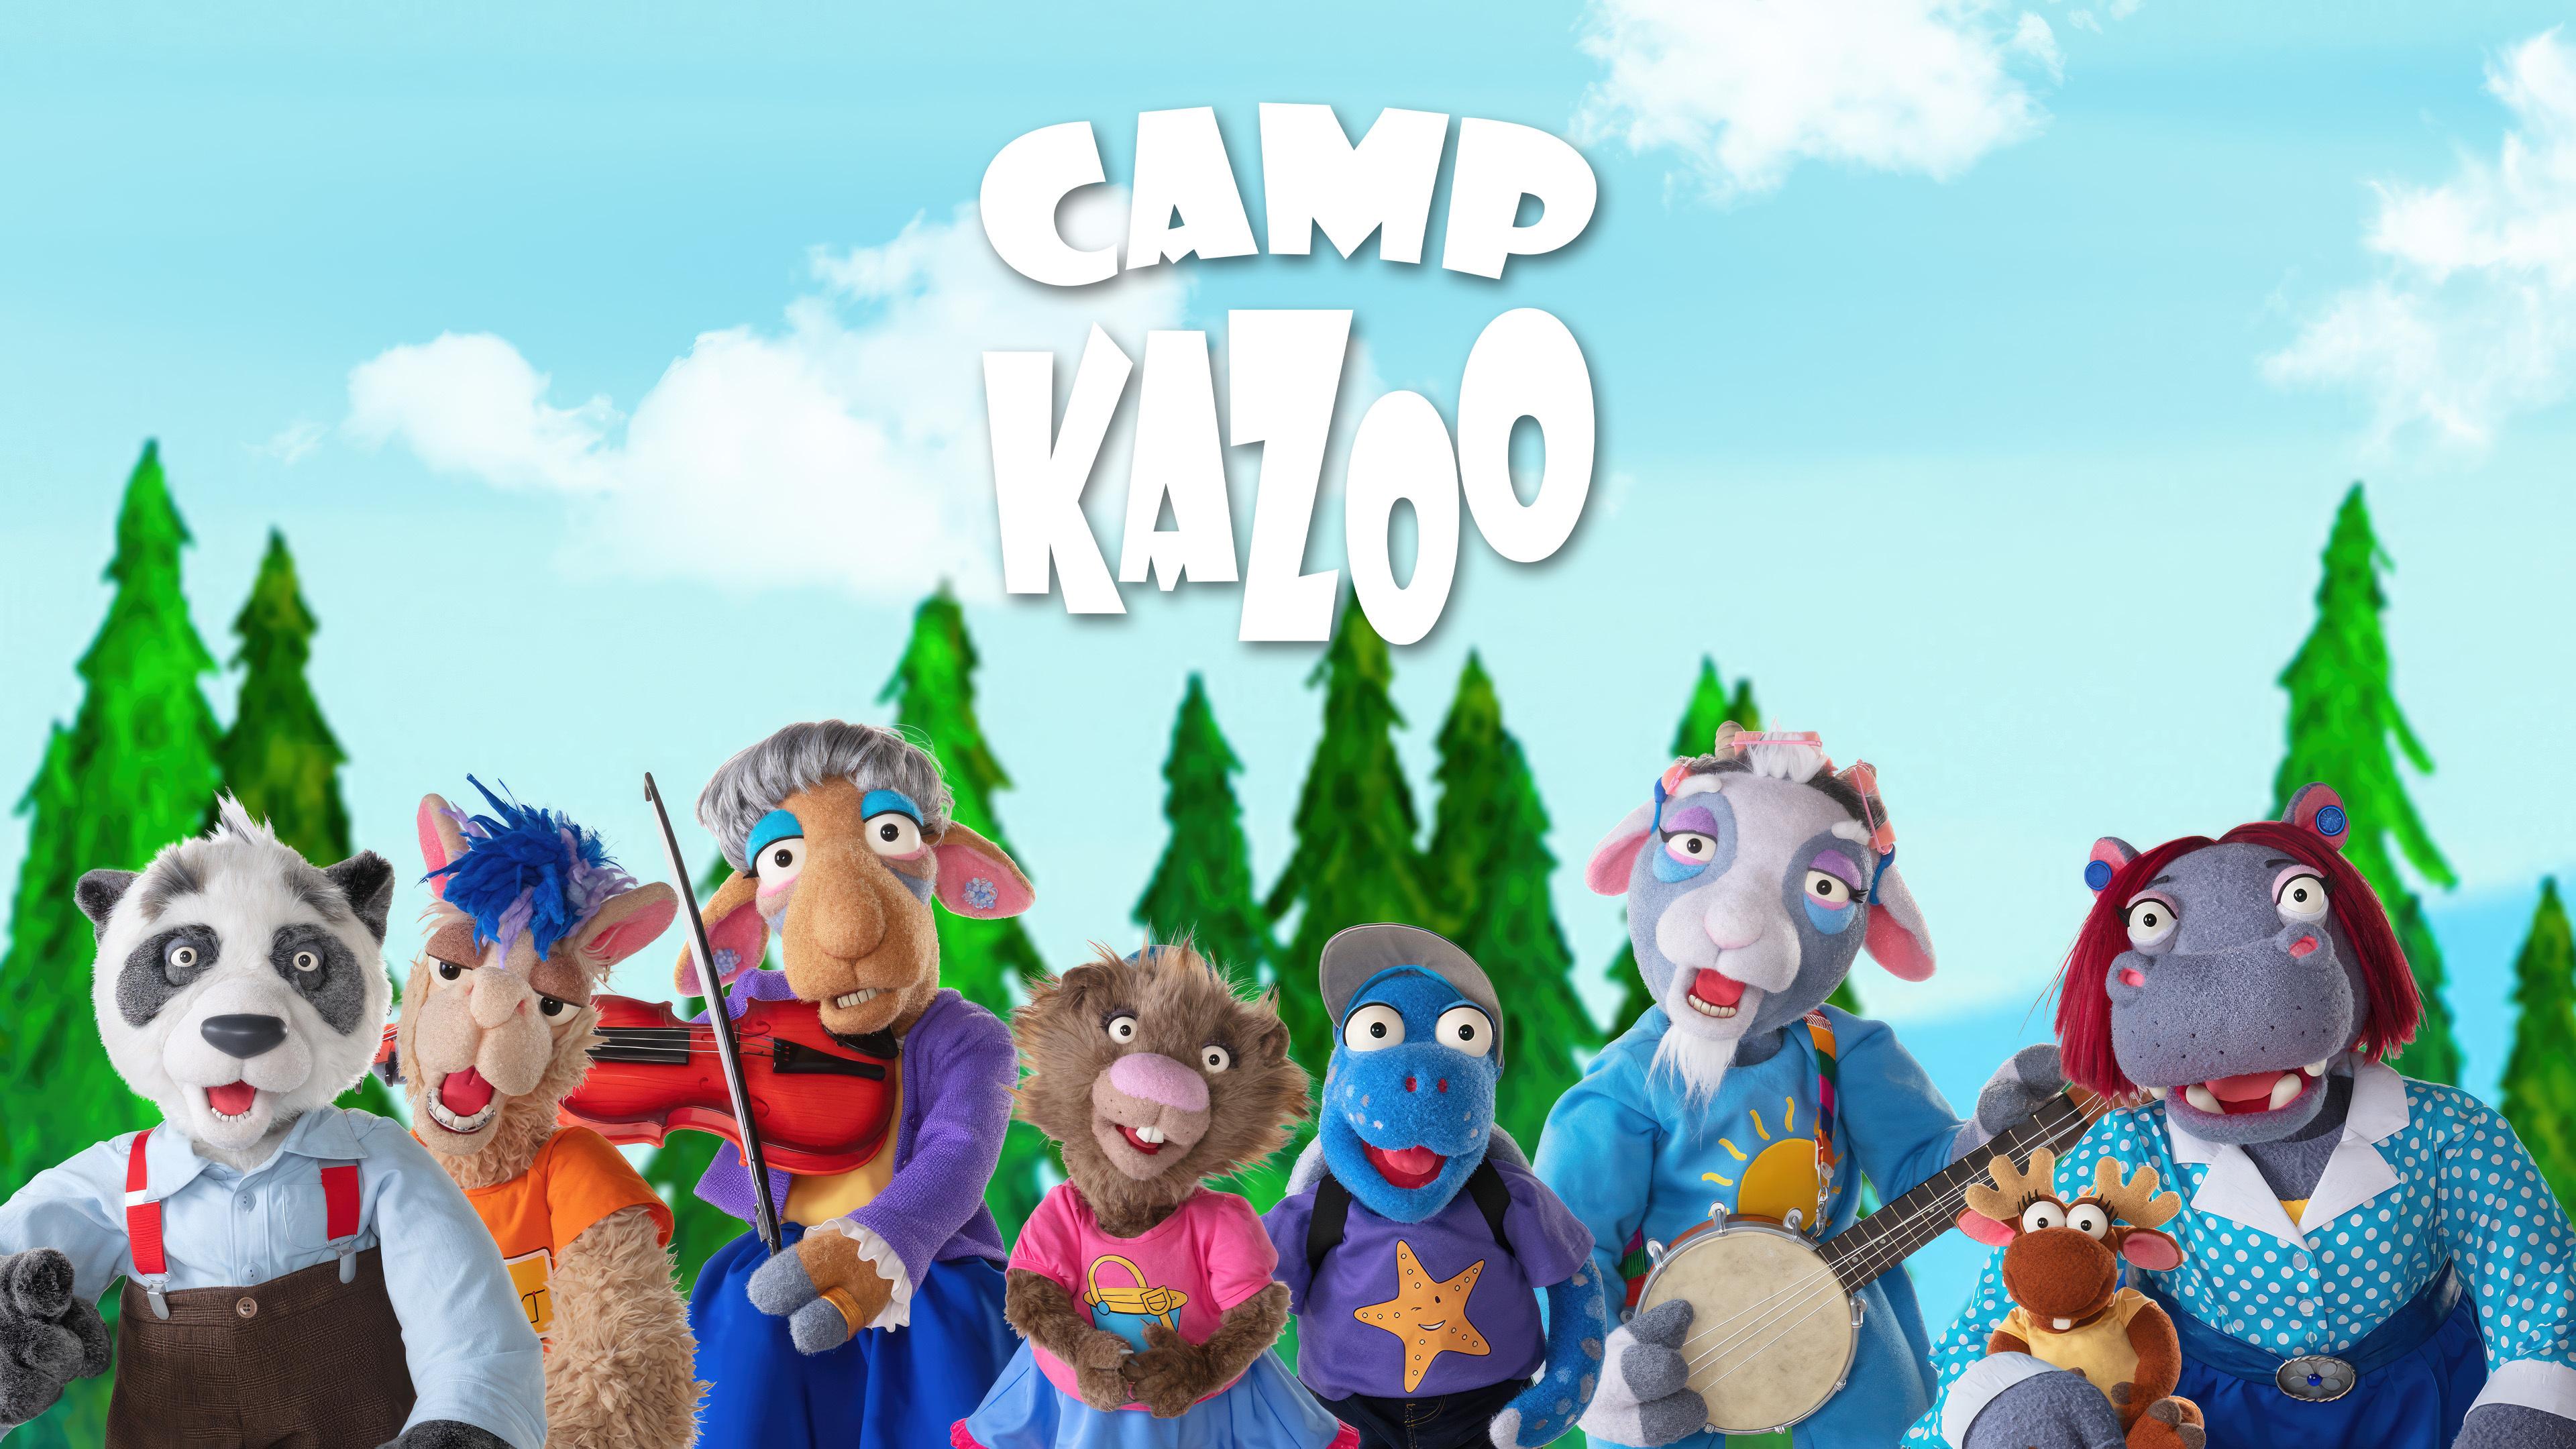 Camp Kazoo